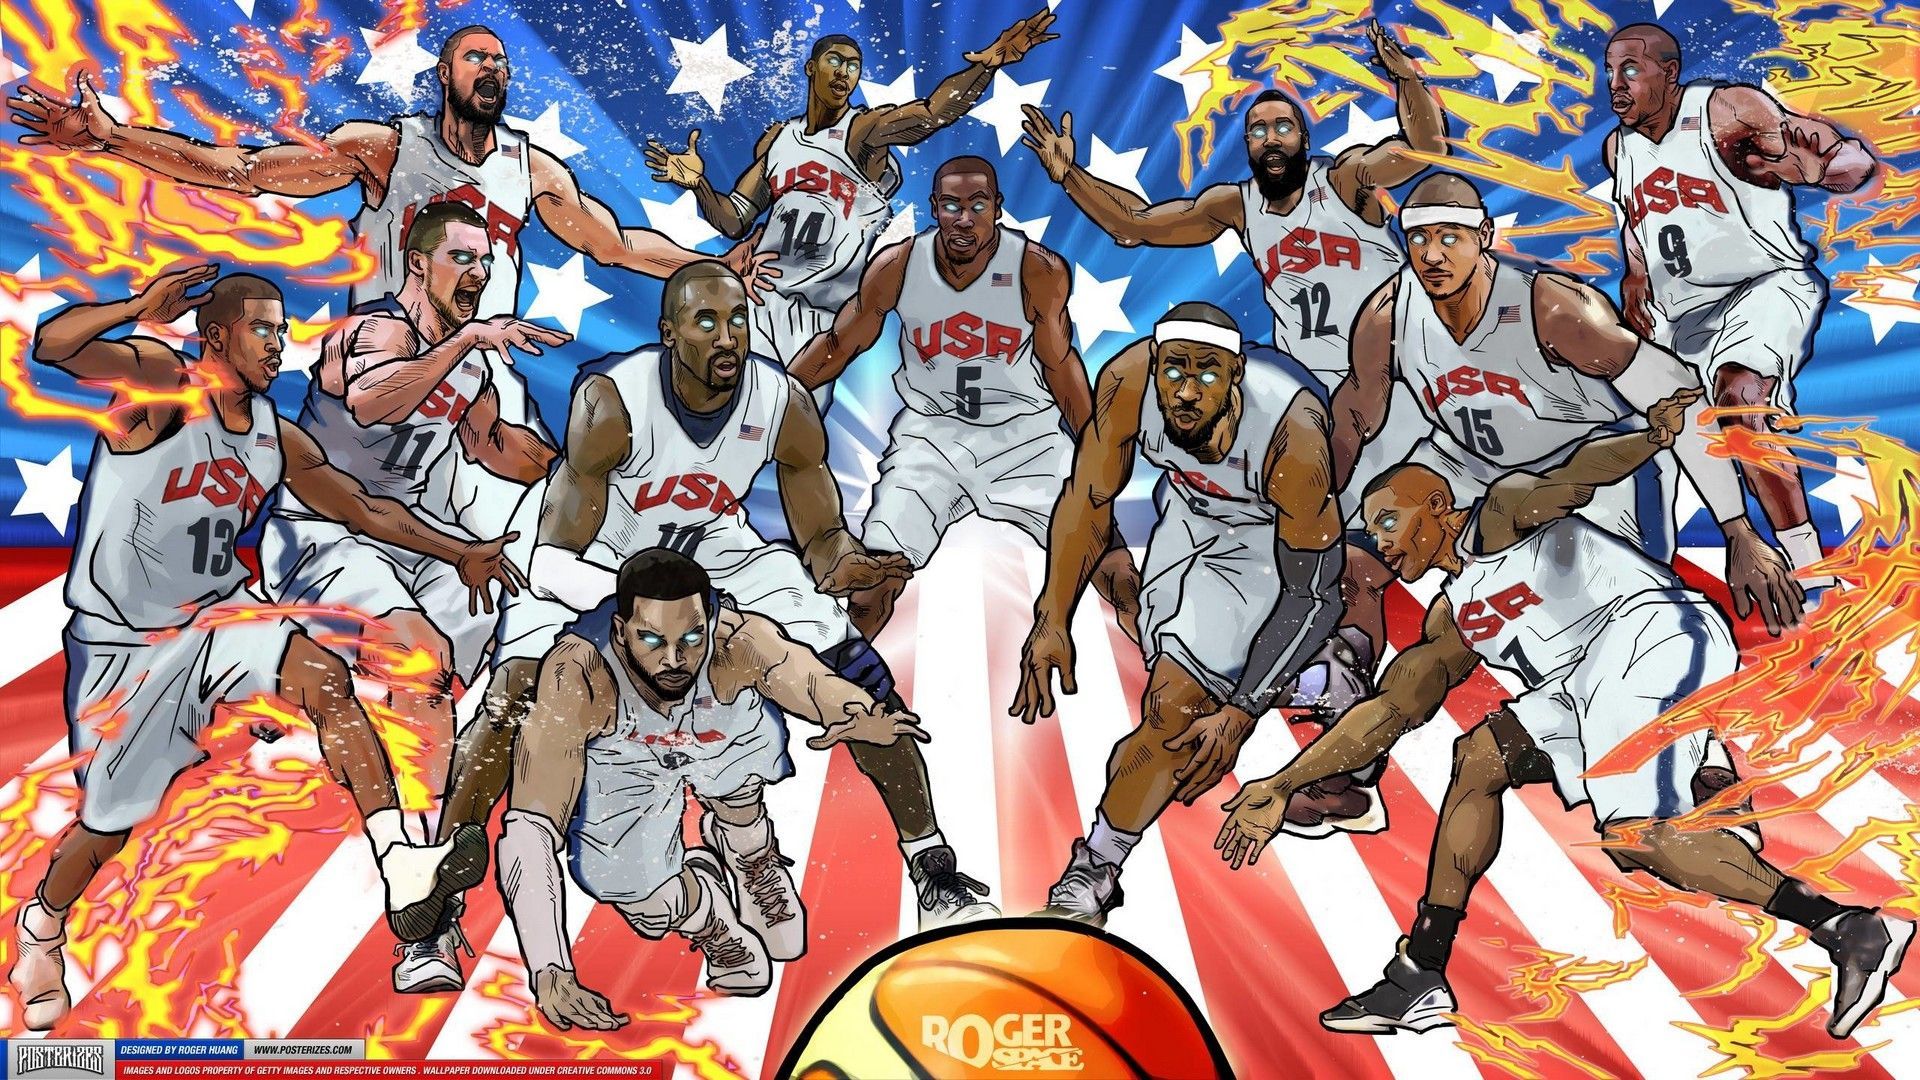 NBA Desktop Wallpaper is the perfect High Quality NBA basketball